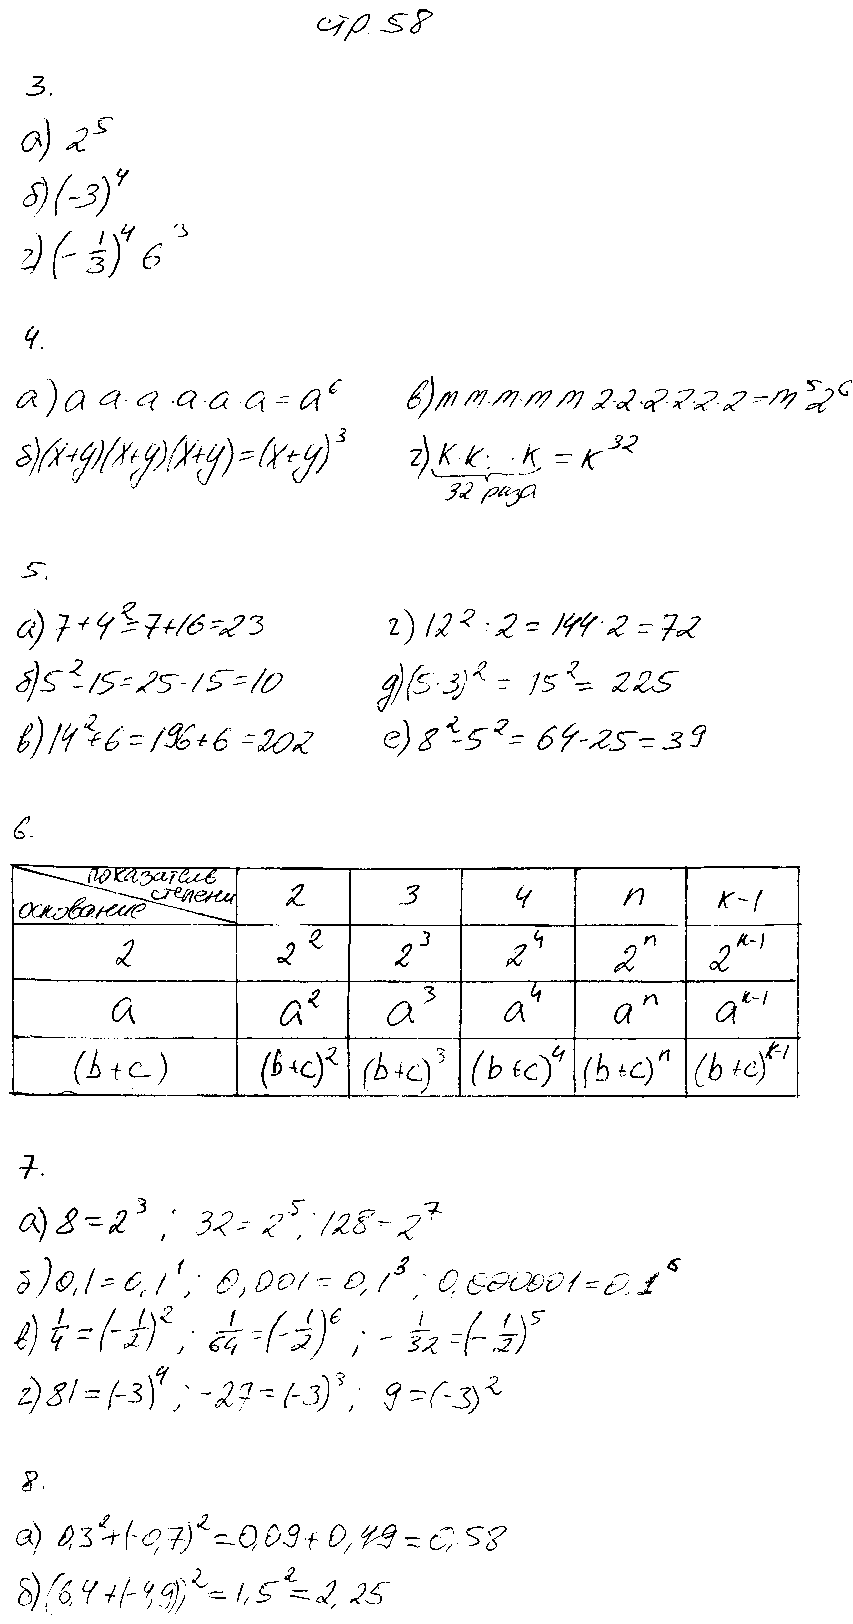 ГДЗ Алгебра 7 класс - стр. 58